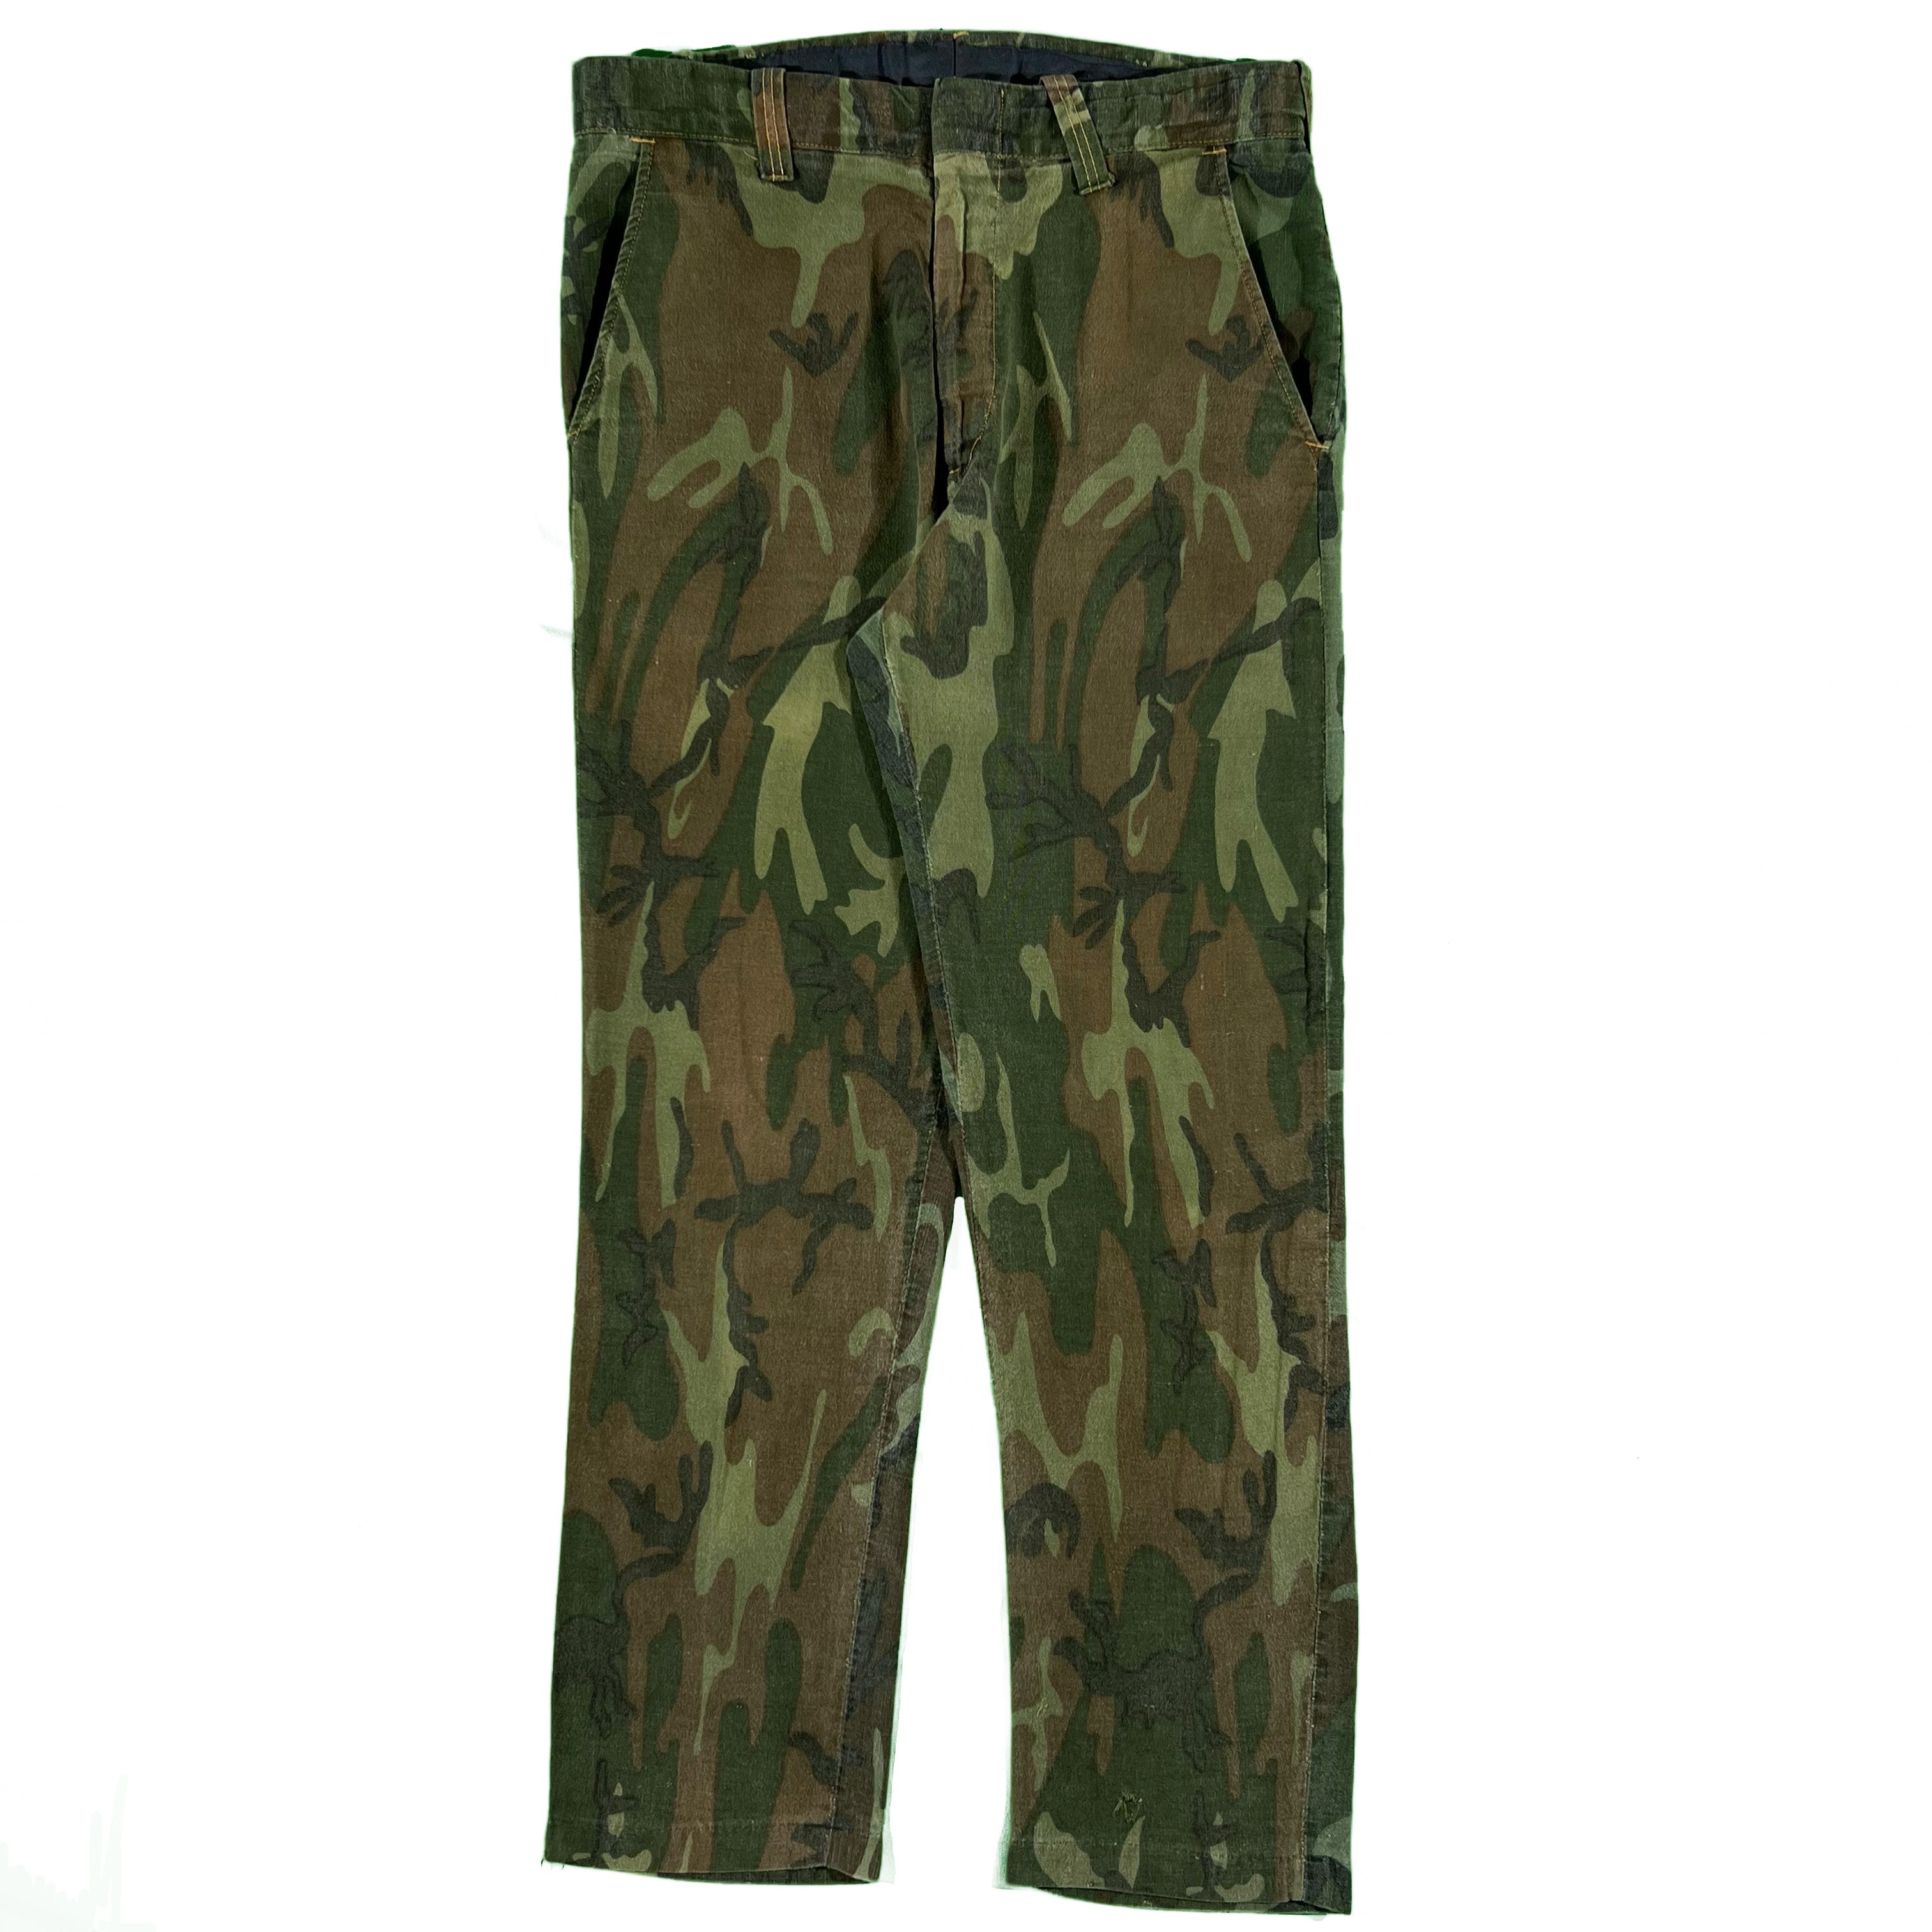 Camo/Military – Plum Garments